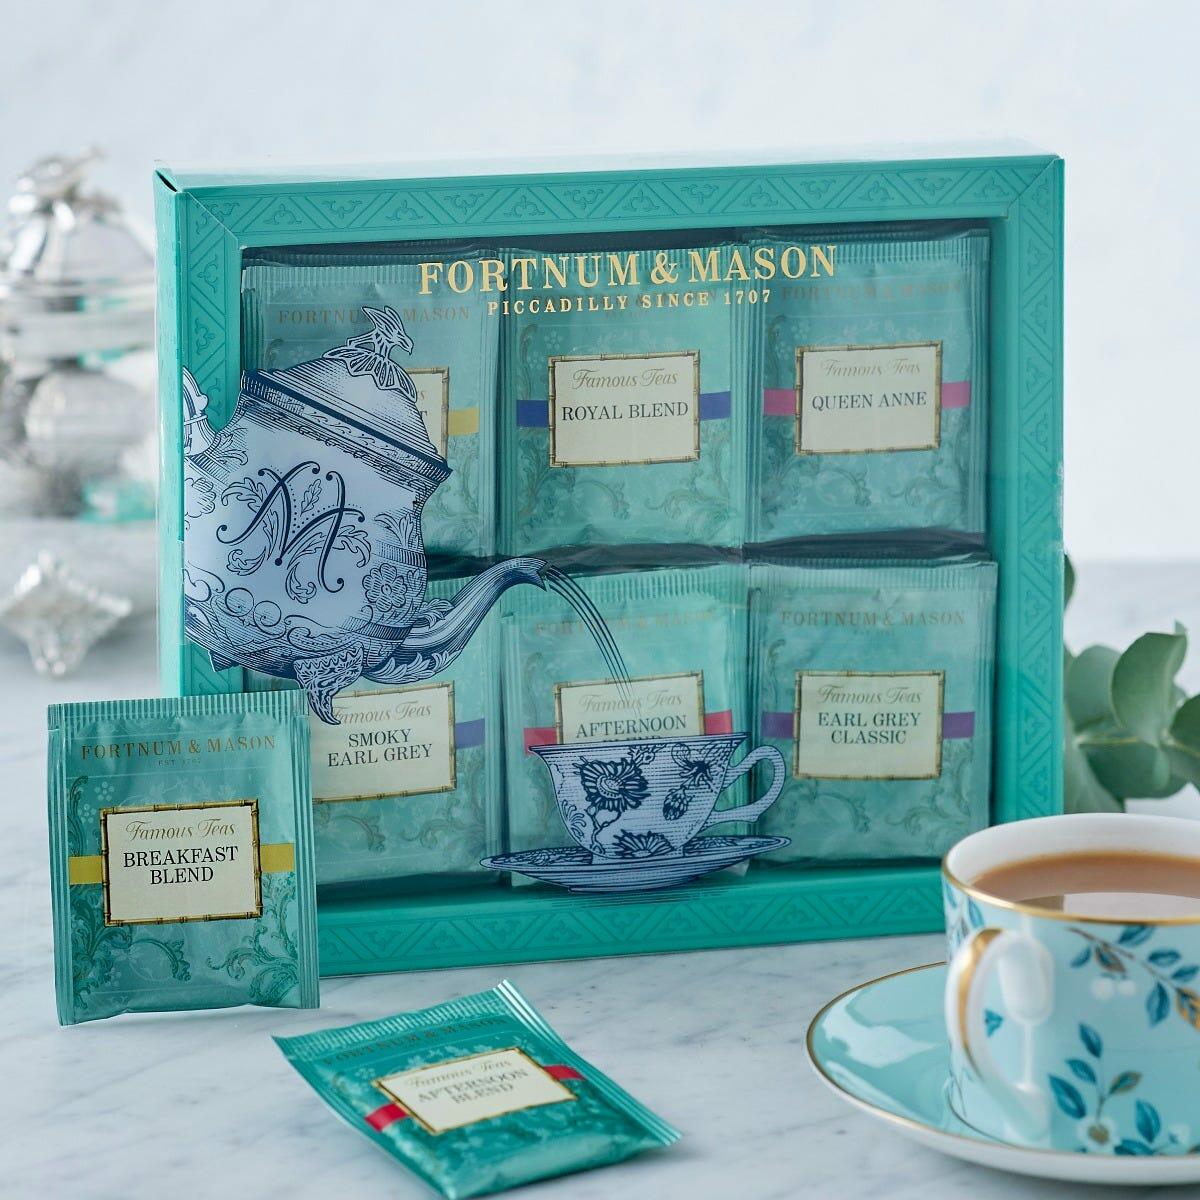 Fortnum & Mason Famous Tea Selection, 60 Tea Bags, 120G